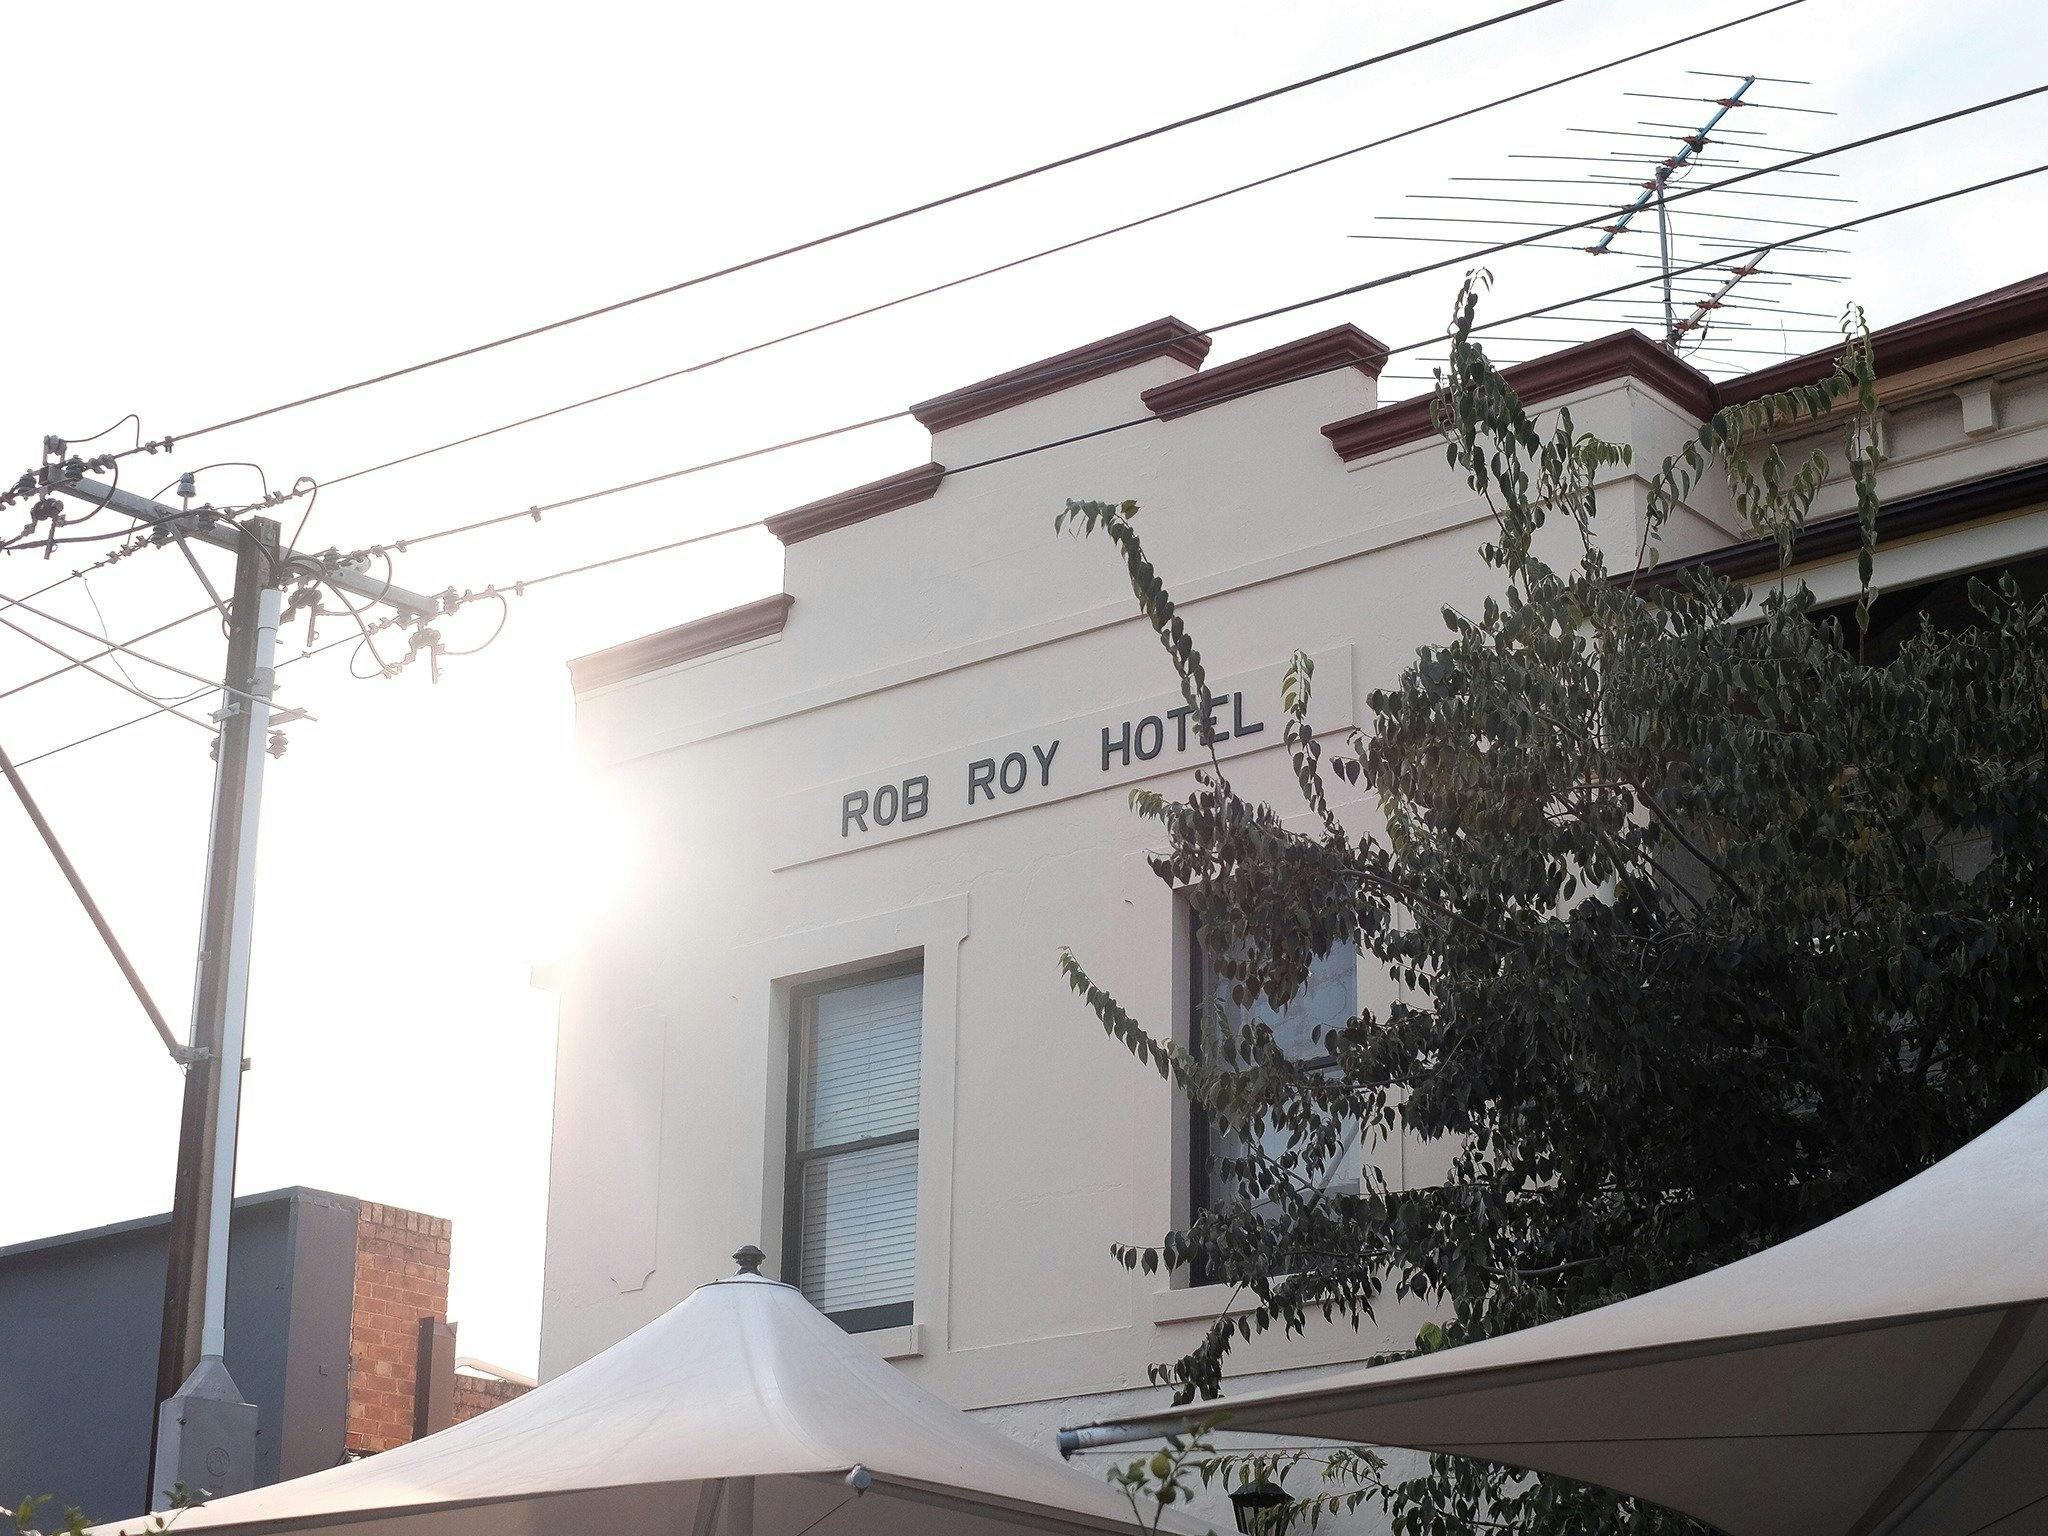 The Rob Roy Hotel